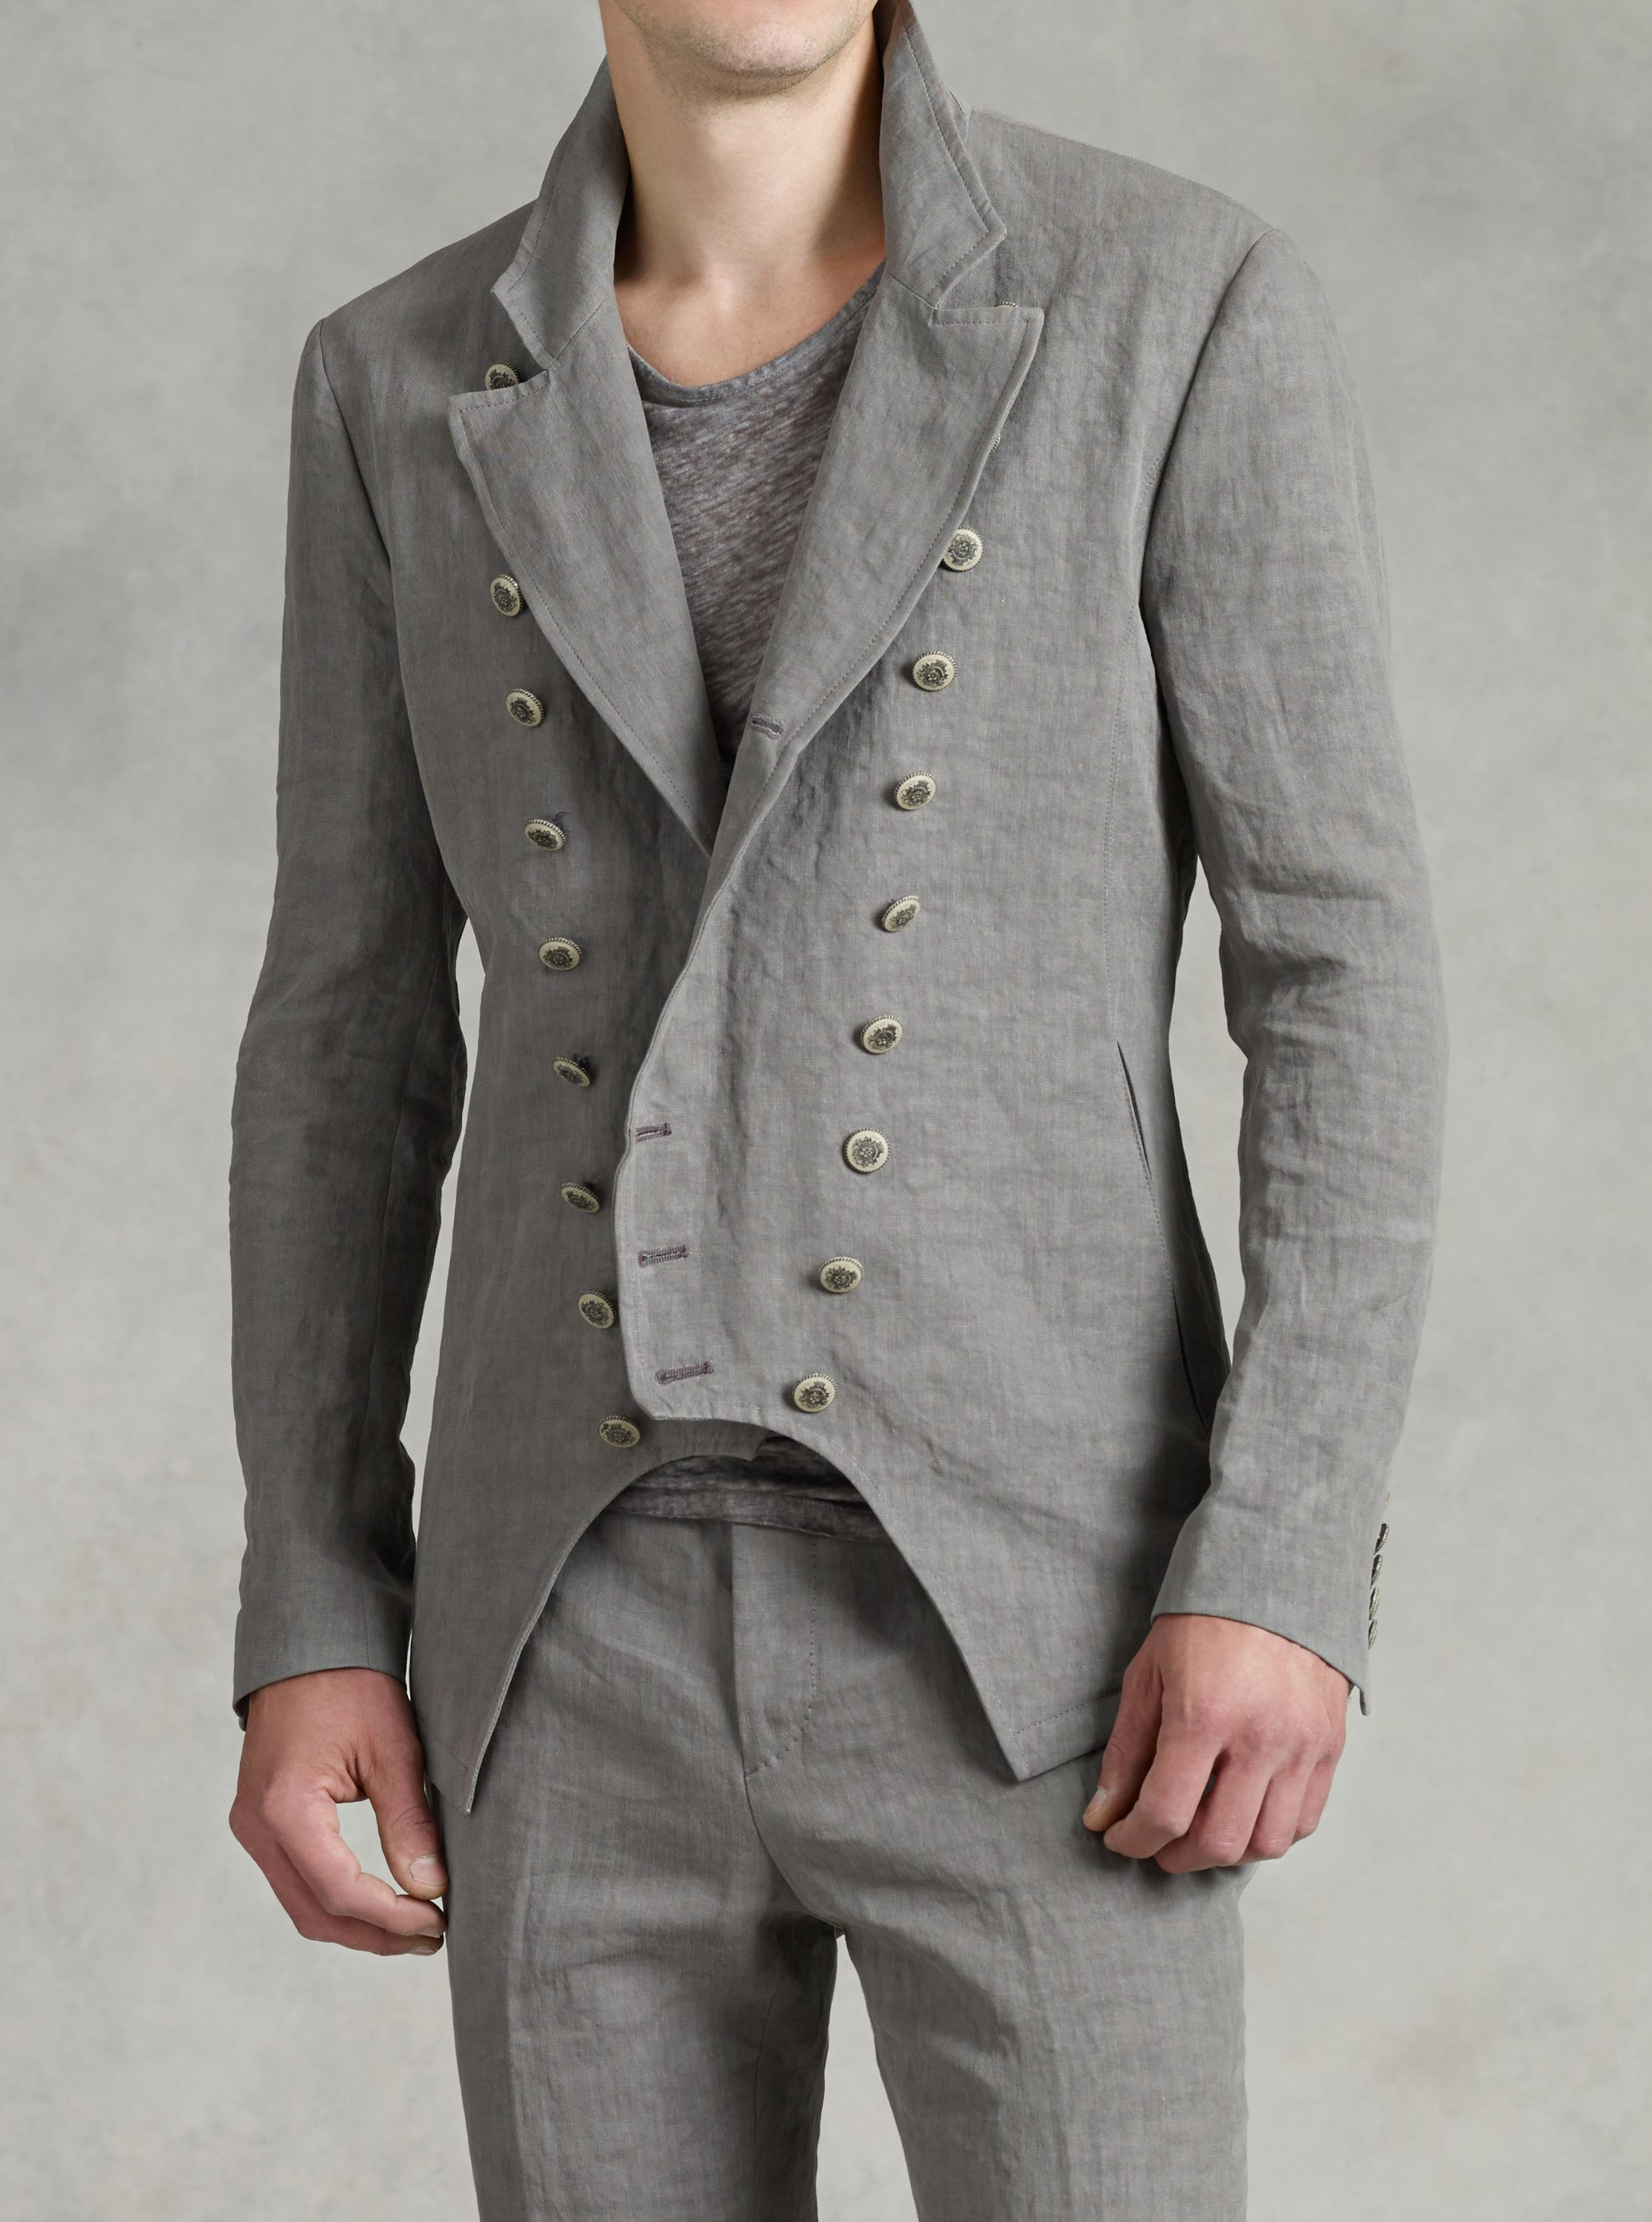 John Varvatos Multi Button Front Cutaway Jacket in Gray for Men - Lyst